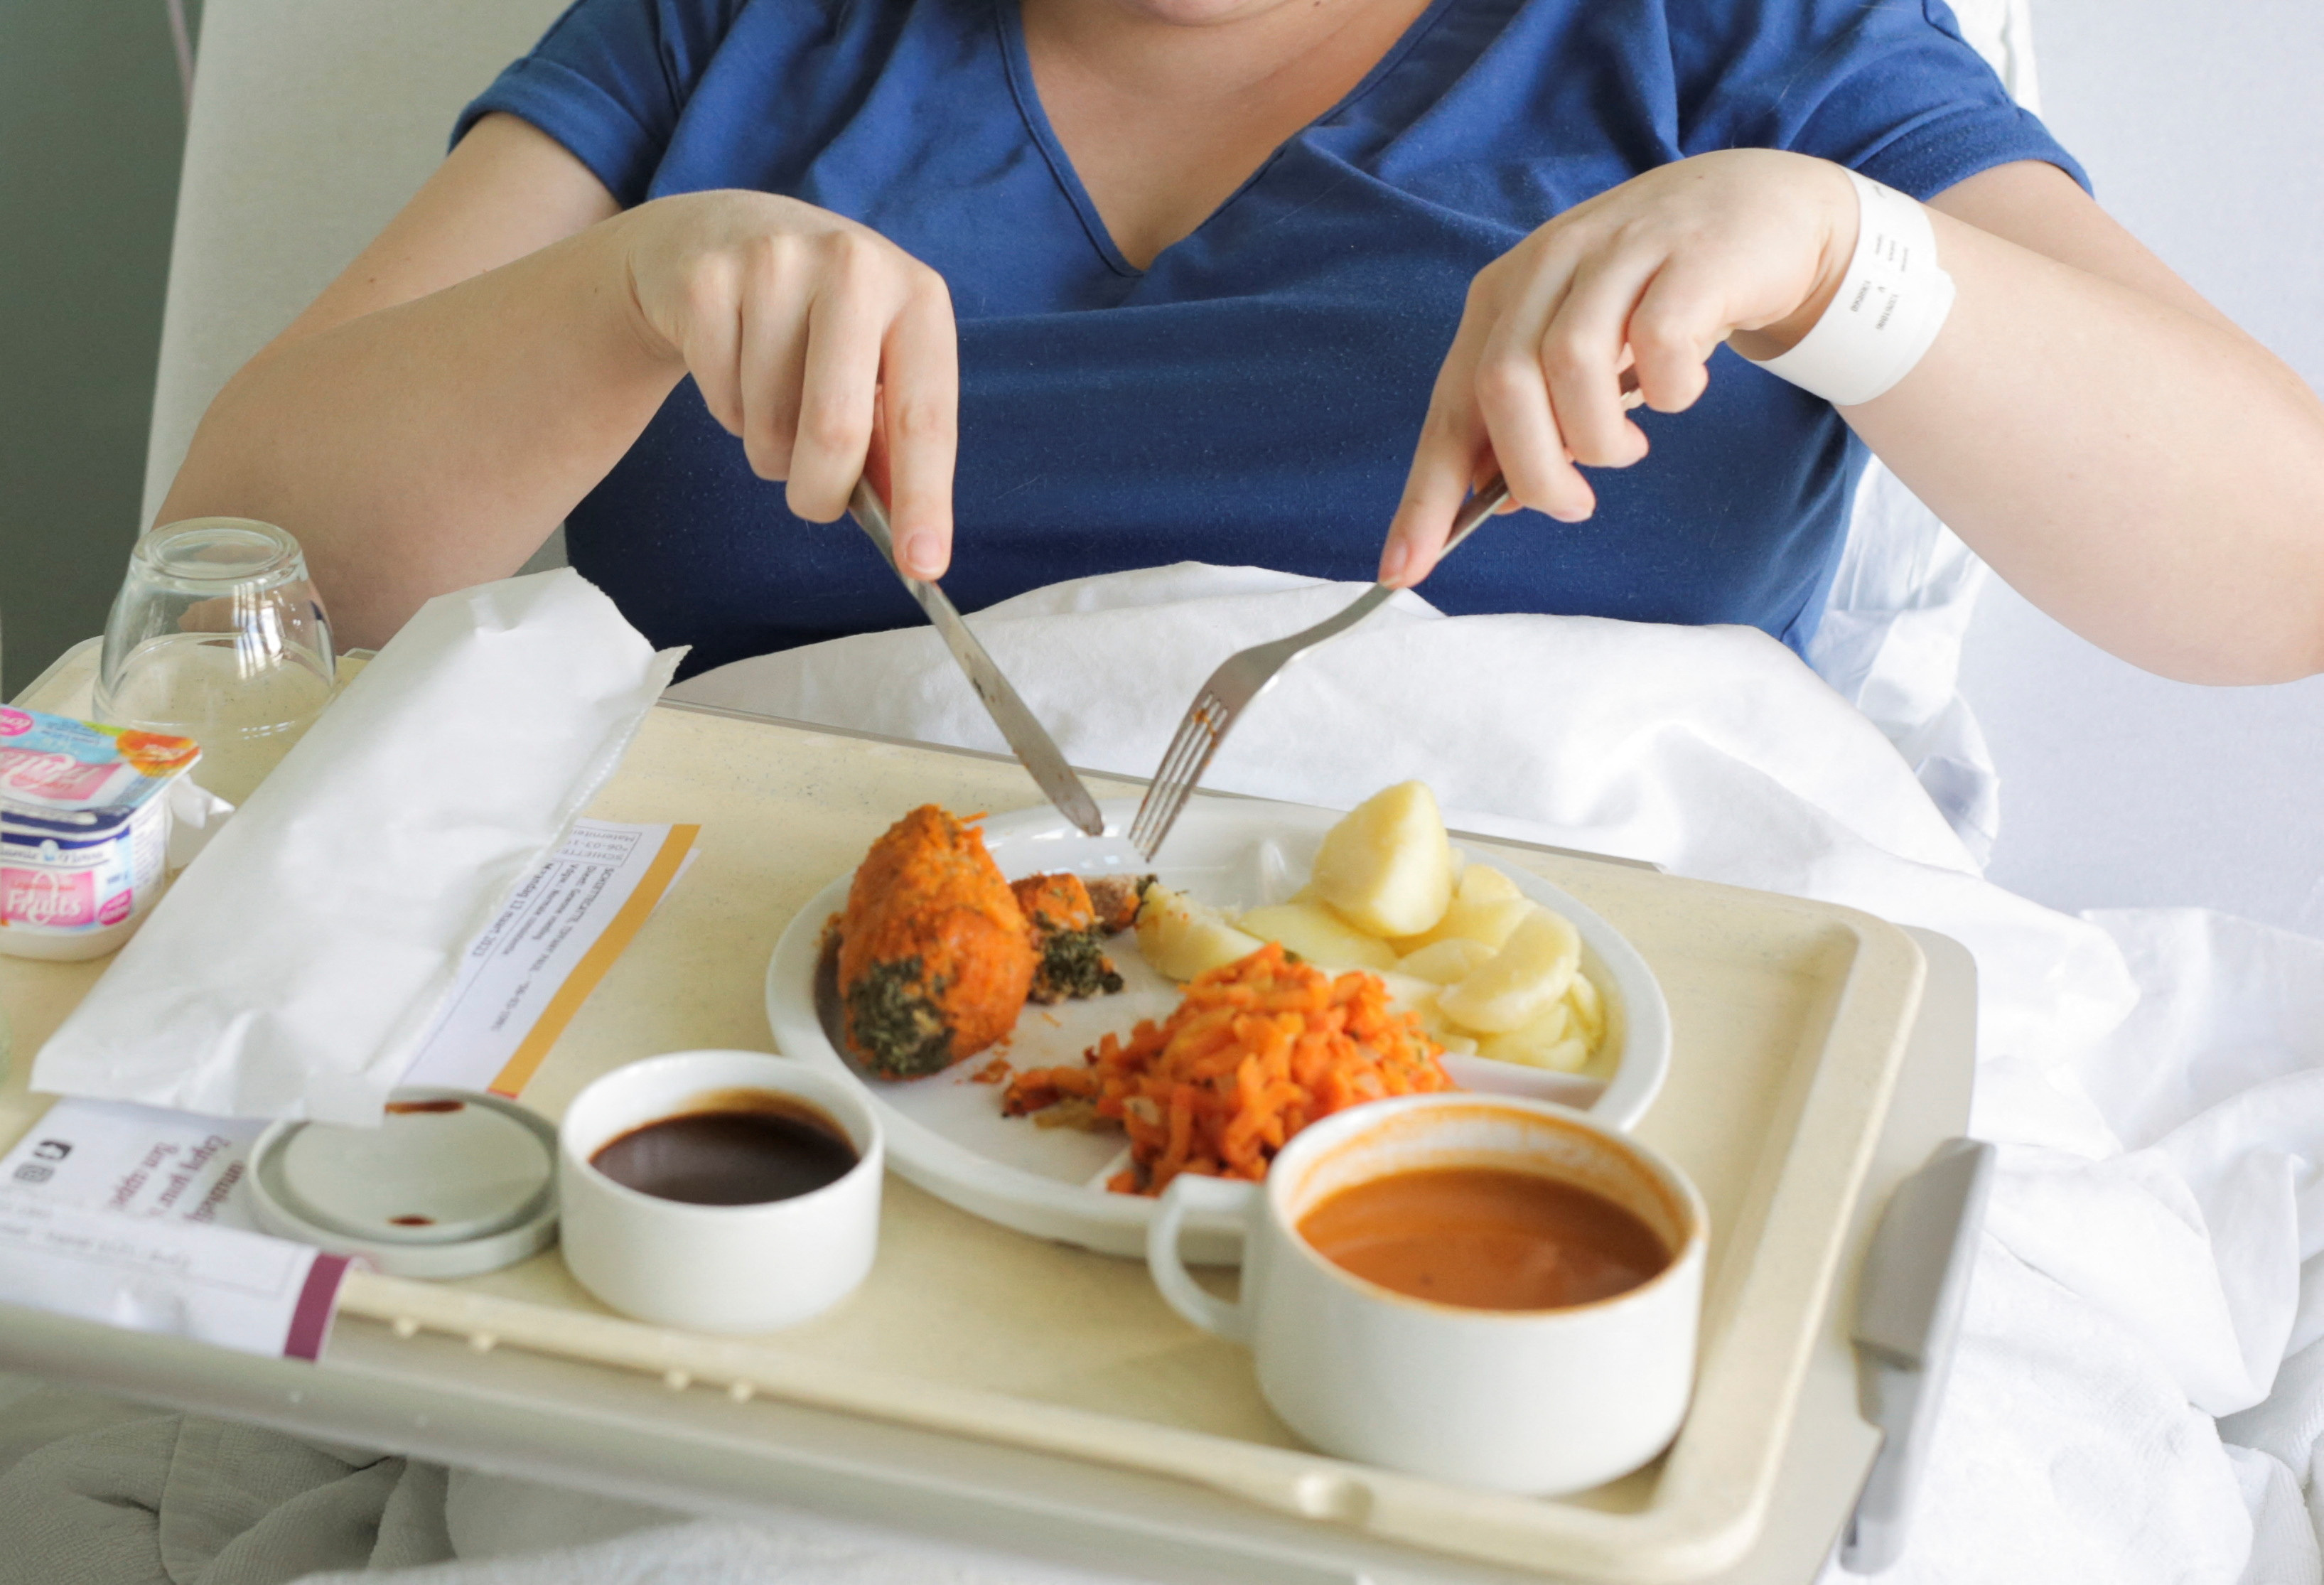 A patient eats her lunch prepared at AZ Groeninge Hospital in Kortrijk